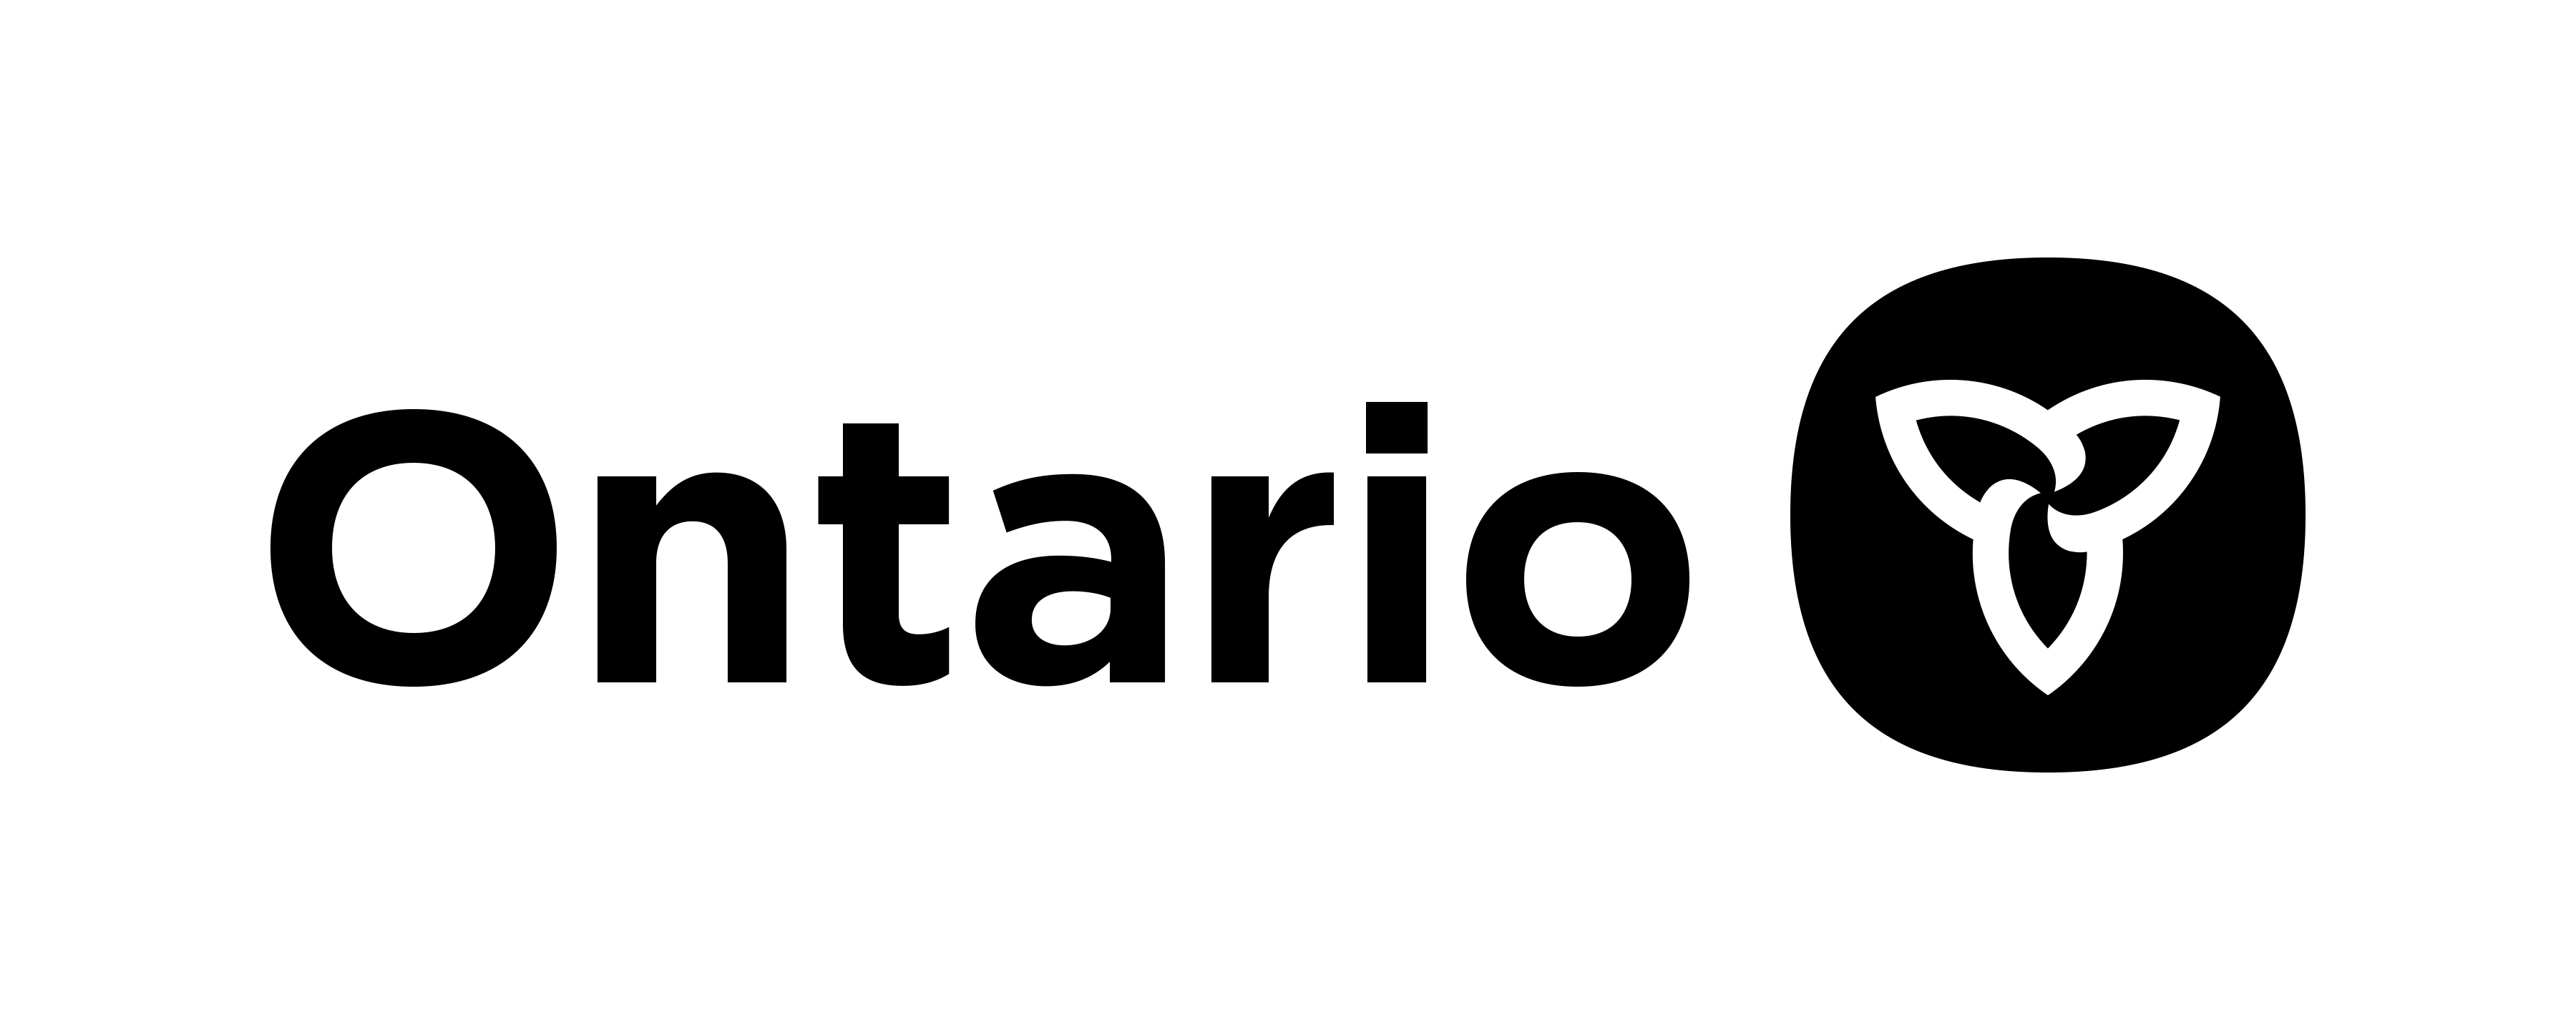 Organization logo of Infrastructure Ontario